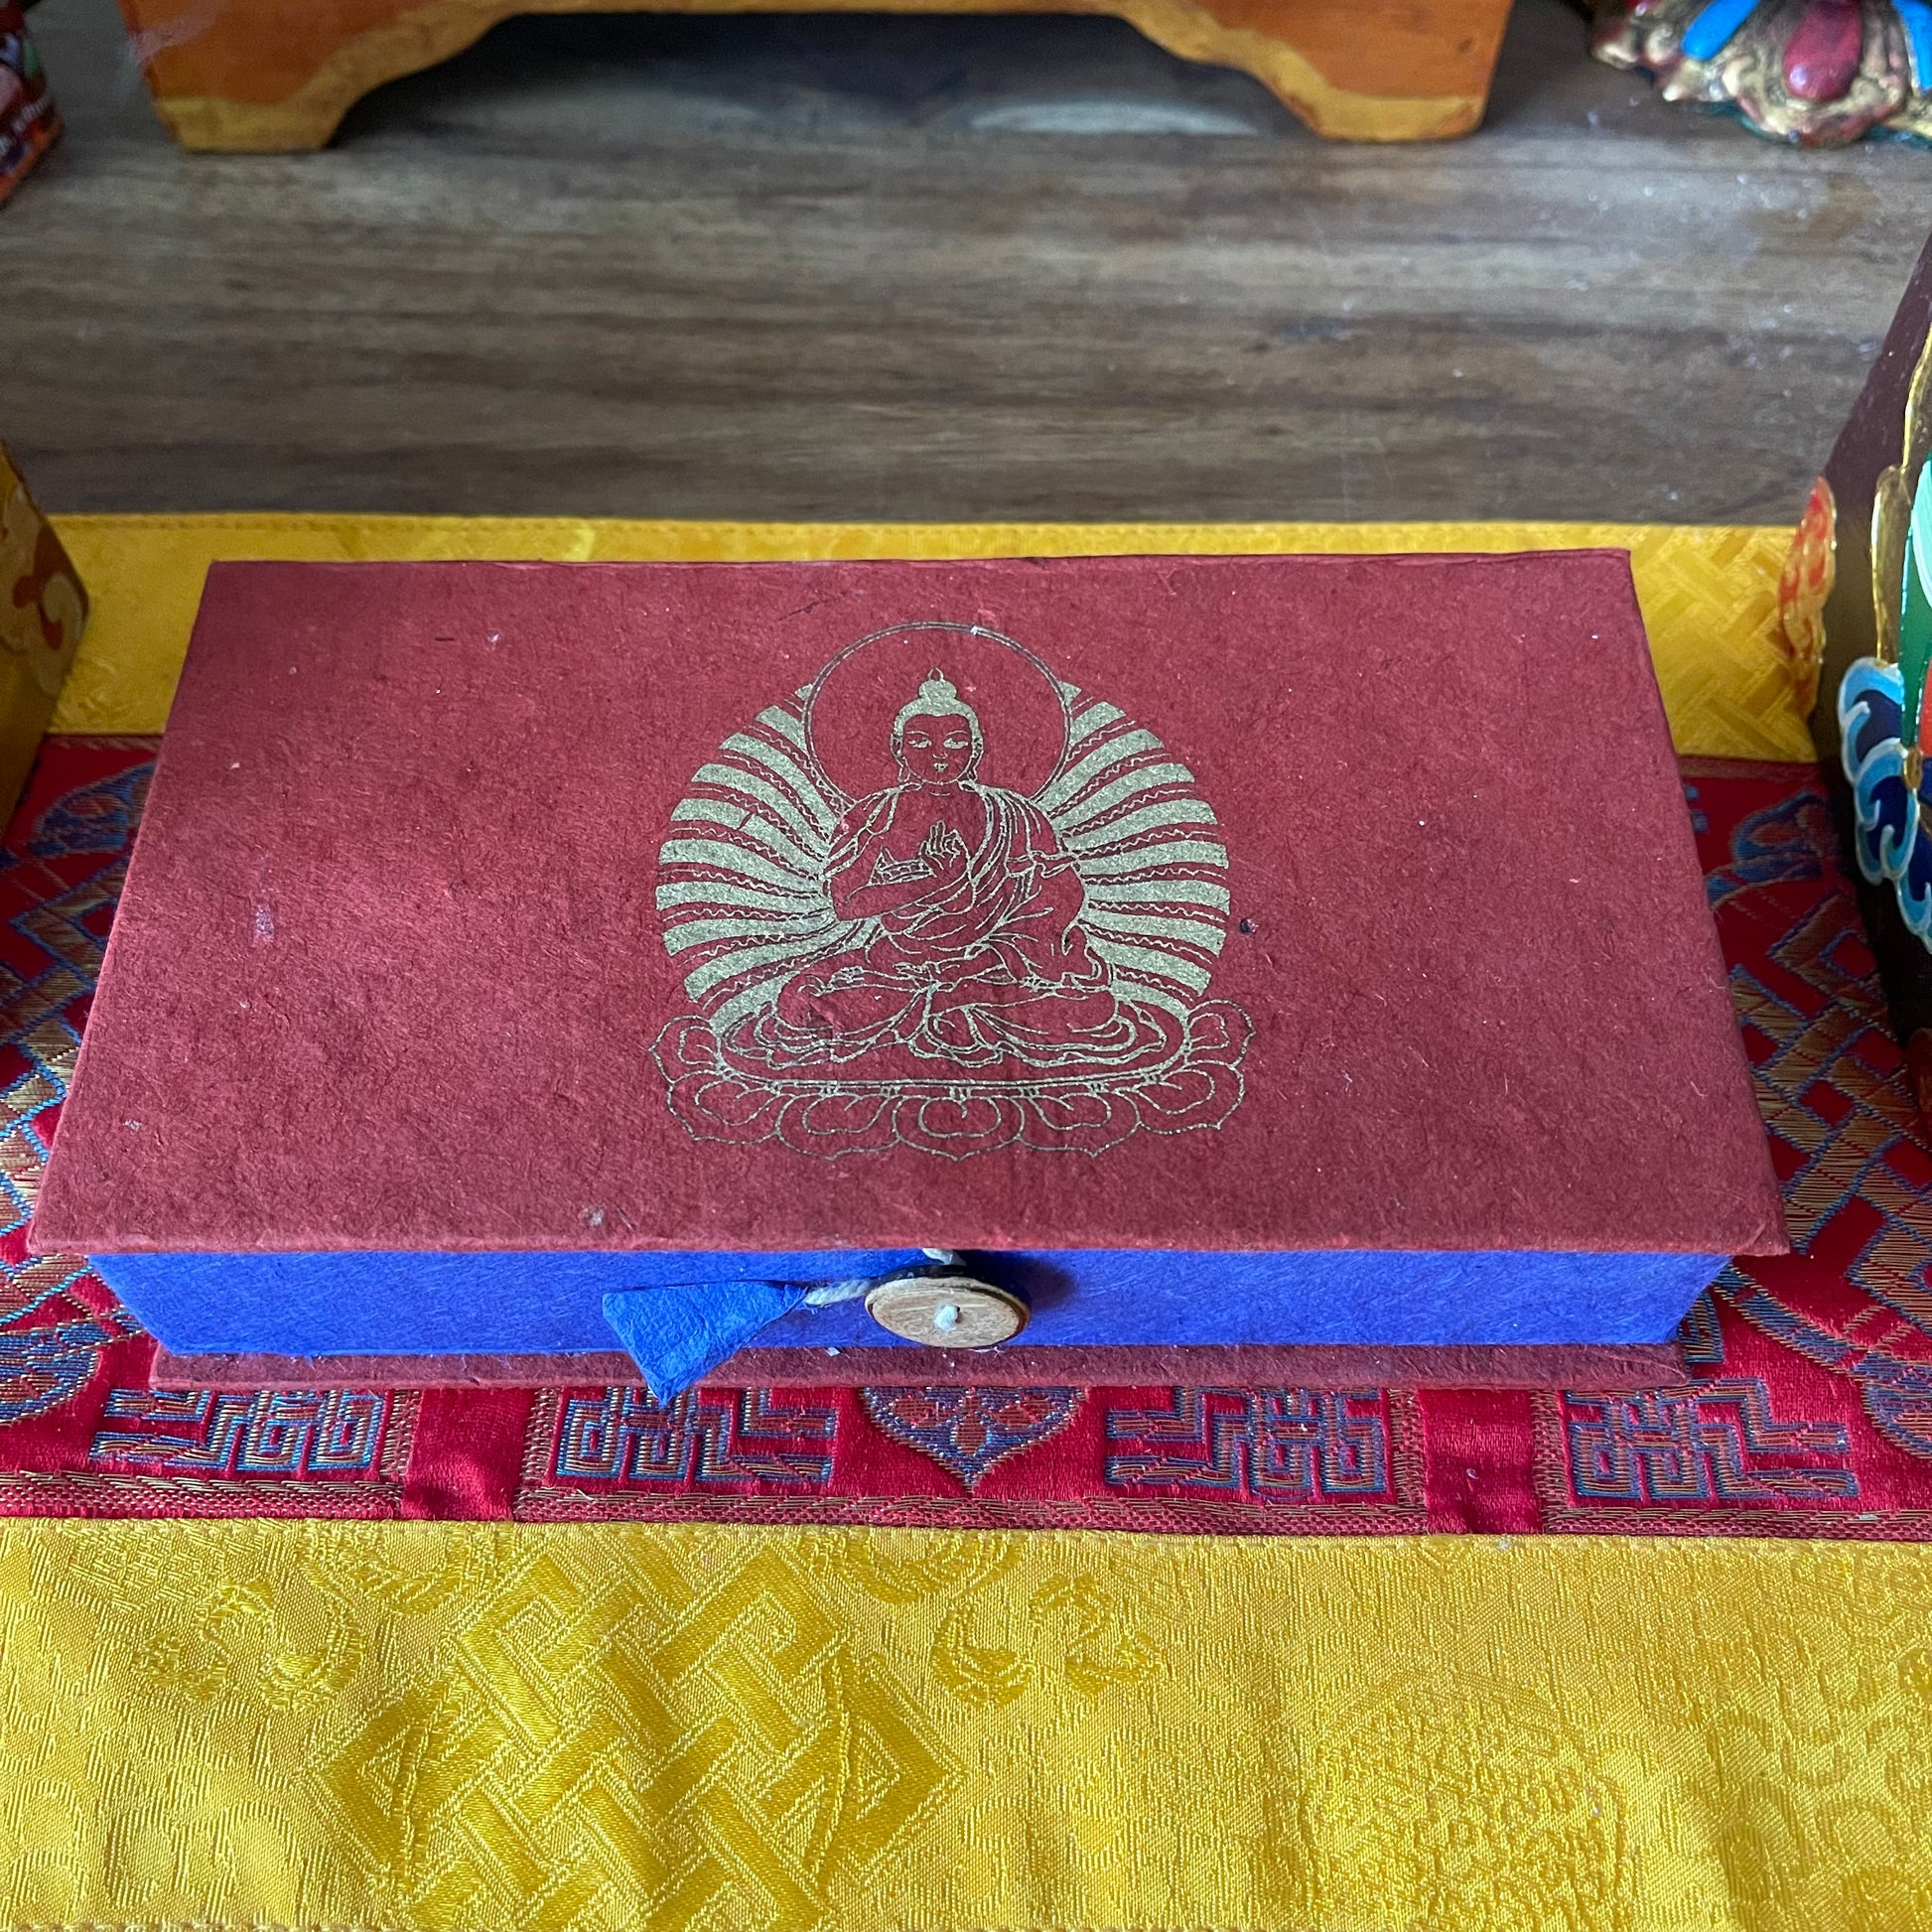 Travelling Altar Lokta paper  Gift Box